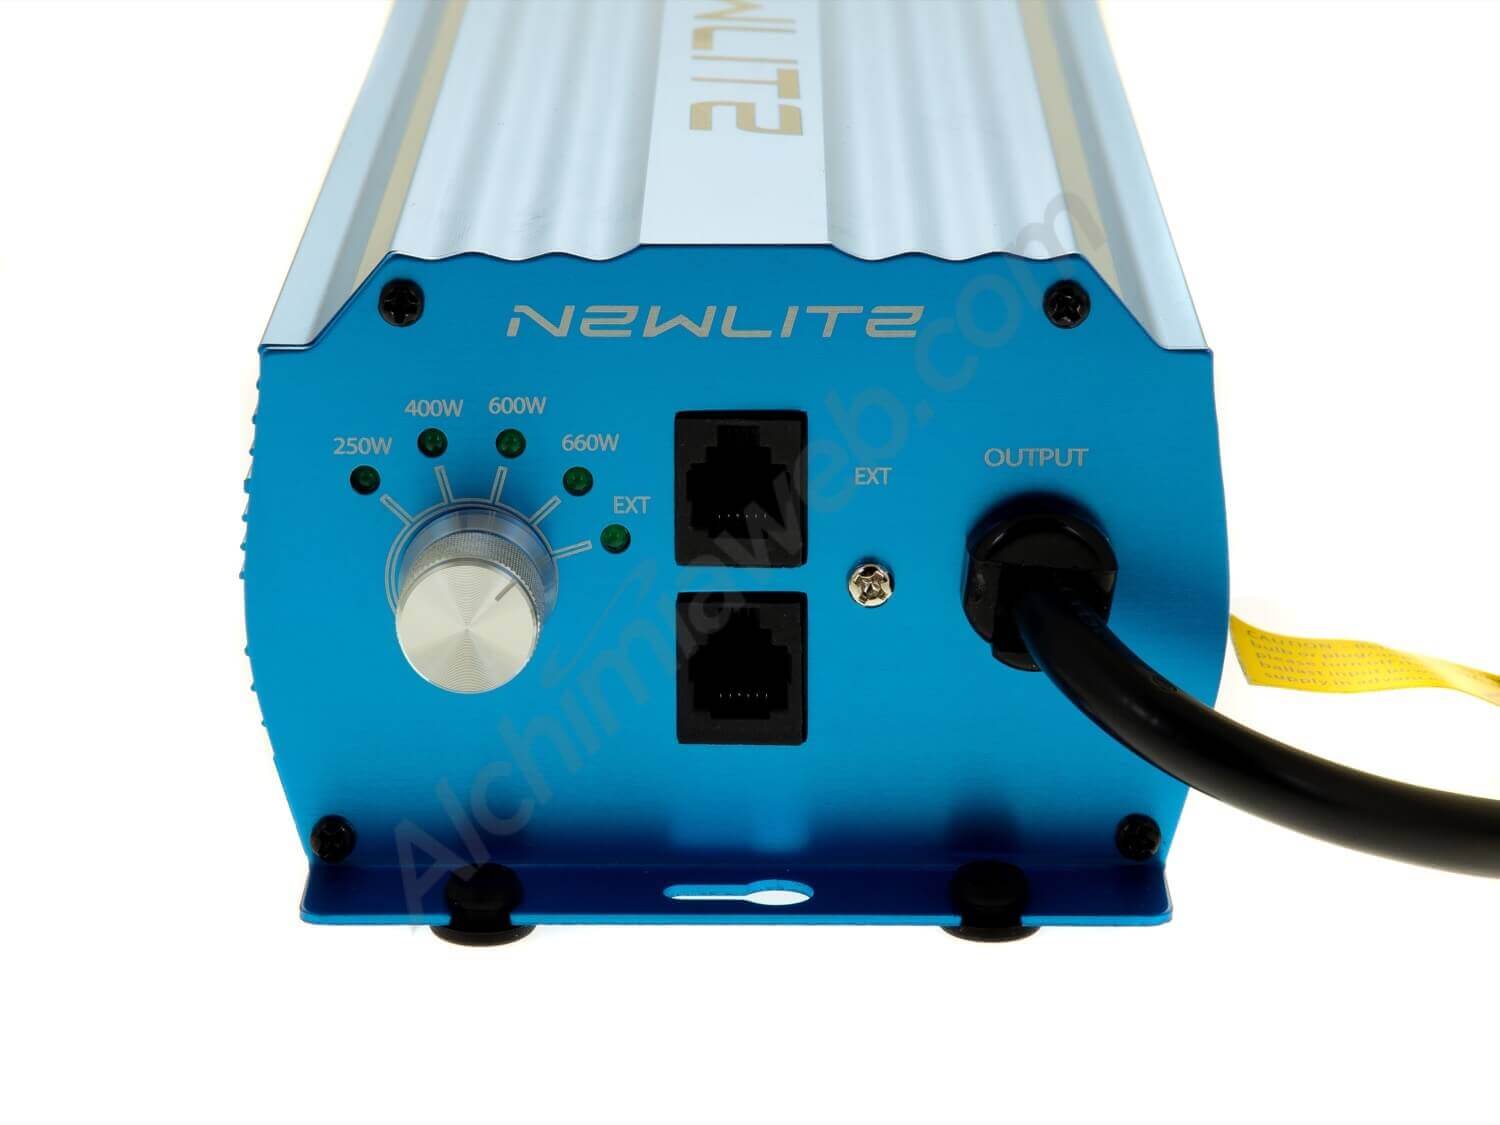 Newlite e-blue 600W dimmable Digital ballast